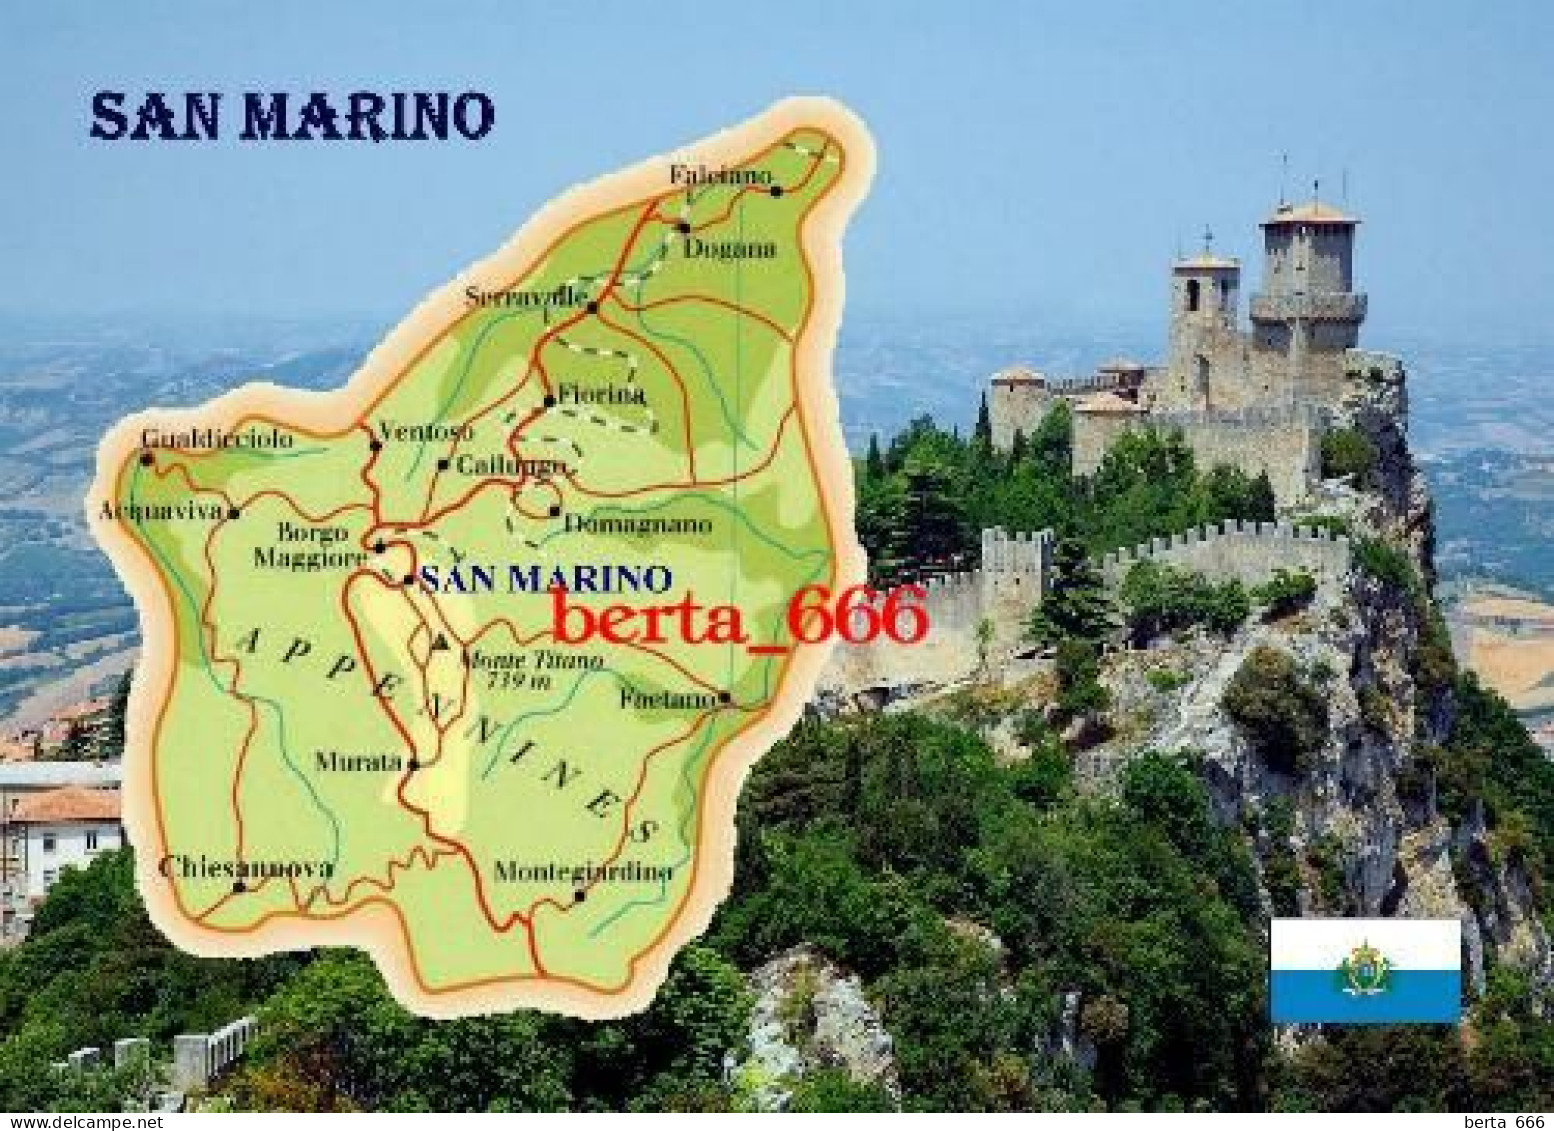 San Marino Country Map New Postcard * Carte Geographique * Landkarte - Saint-Marin